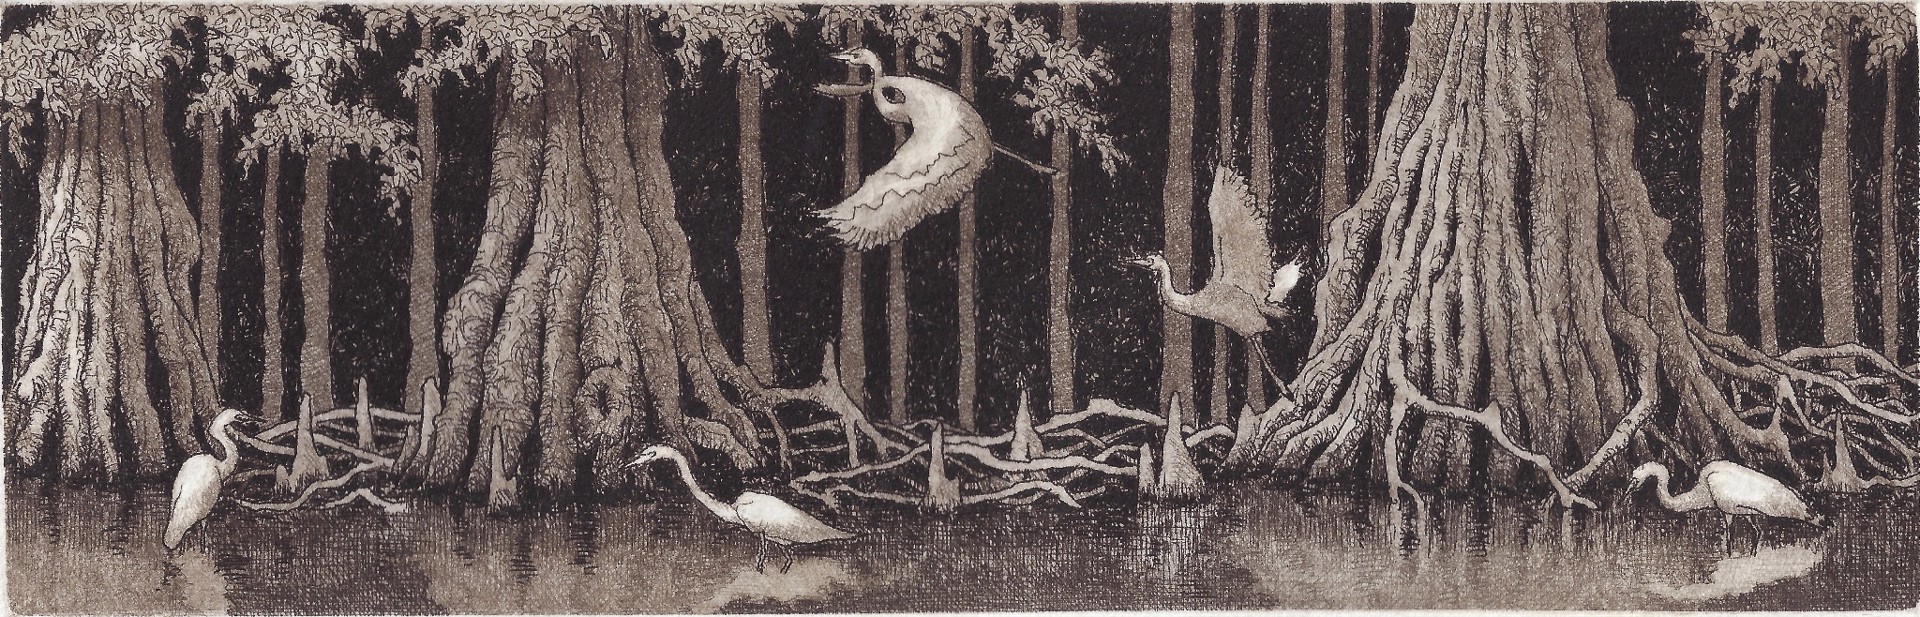 Egrets and Cypress by David Hunter